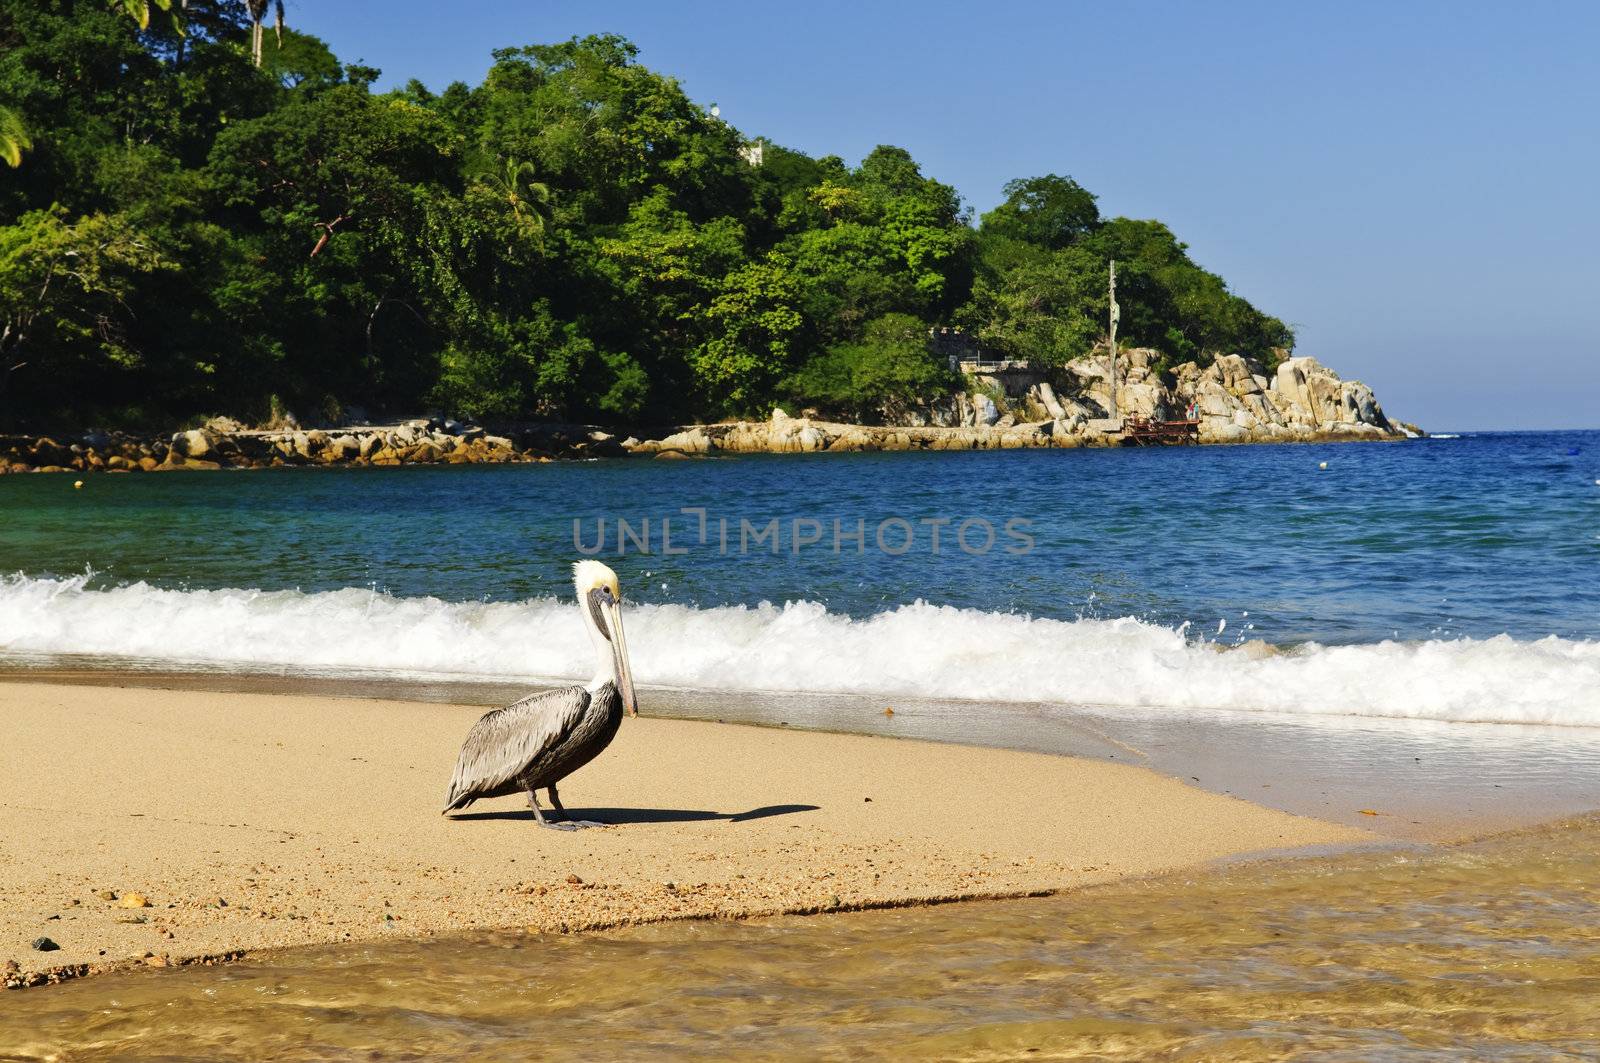 Pelican on beach near Pacific ocean in Mexico